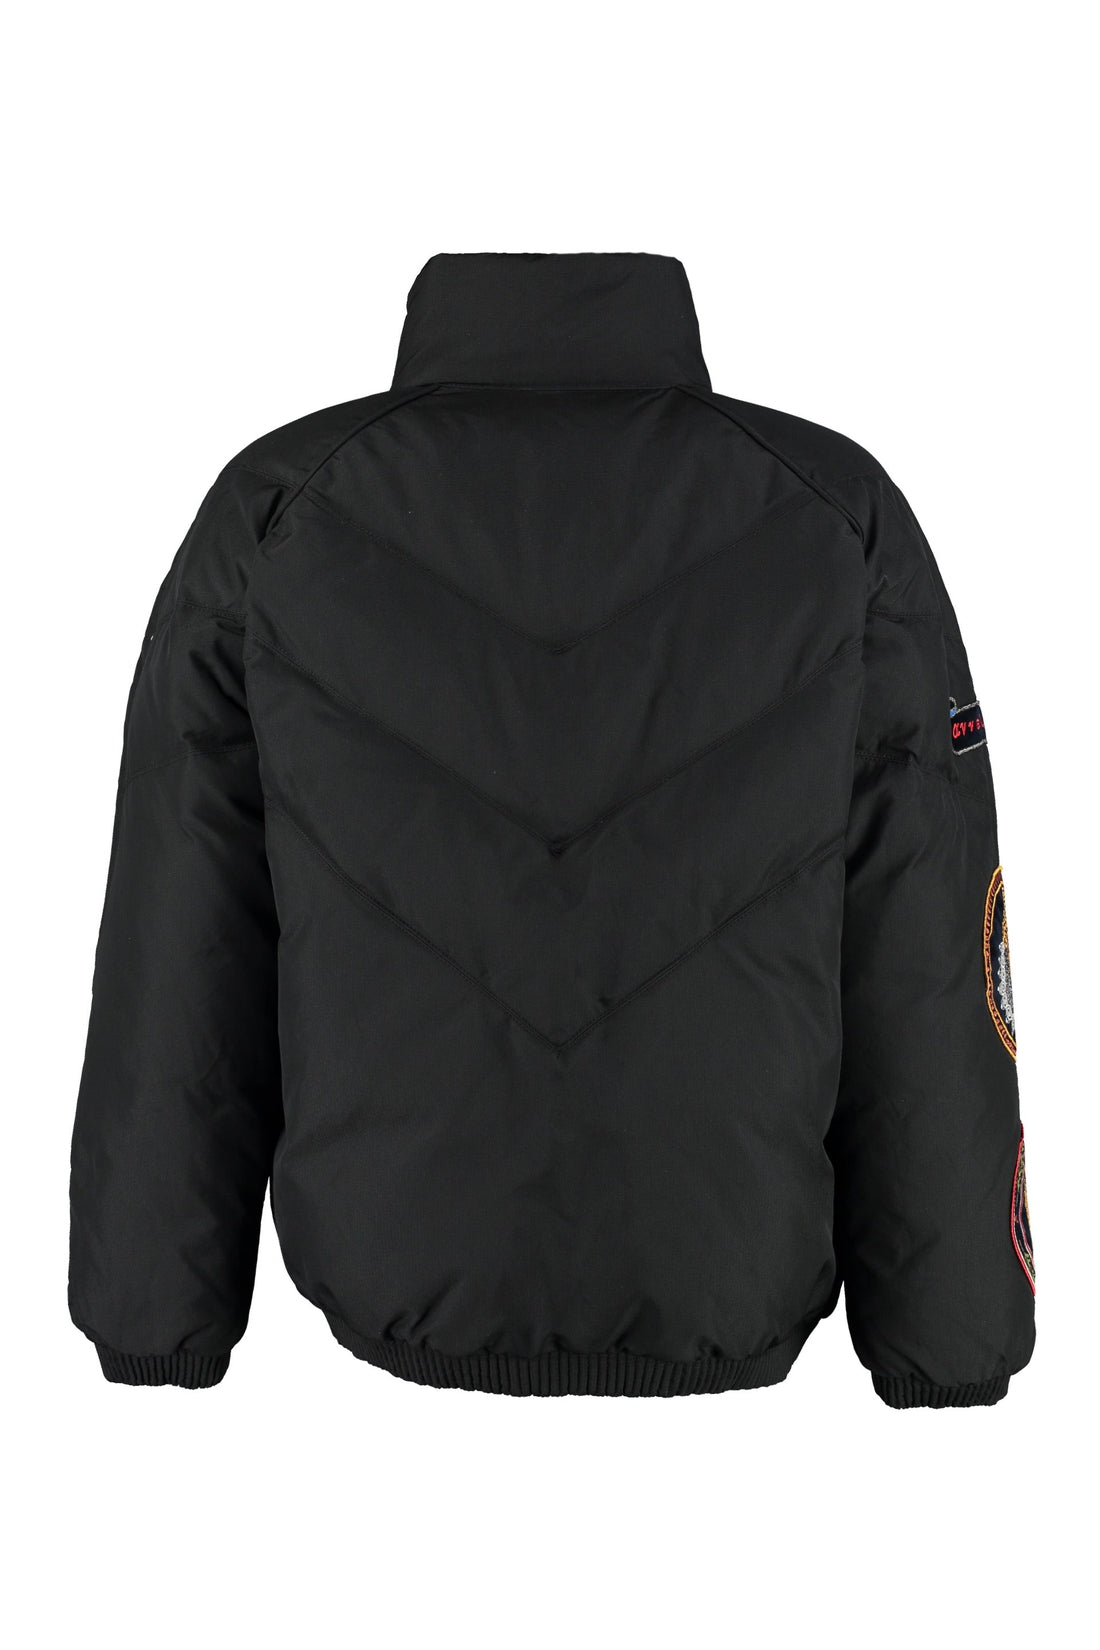 Moncler-OUTLET-SALE-Minho full zip padded jacket-ARCHIVIST